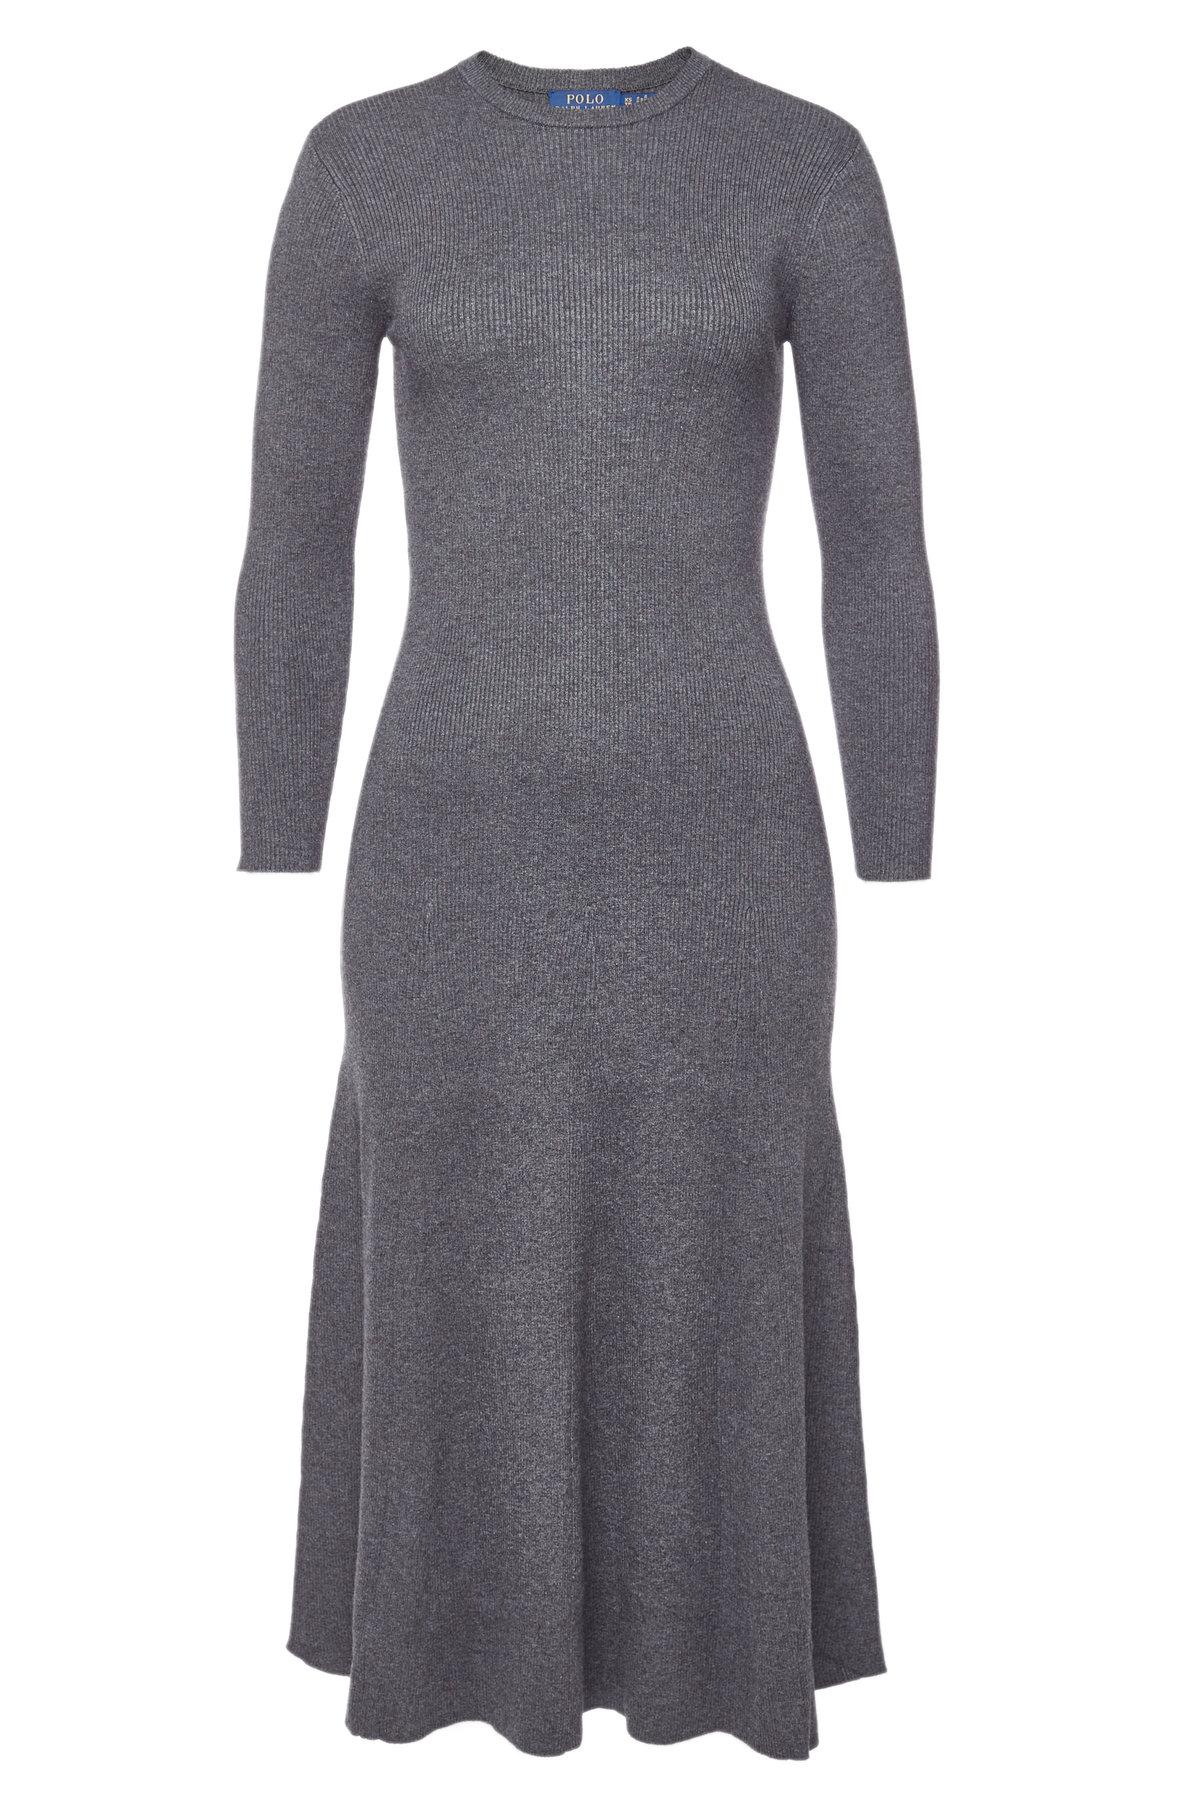 ralph lauren grey dress